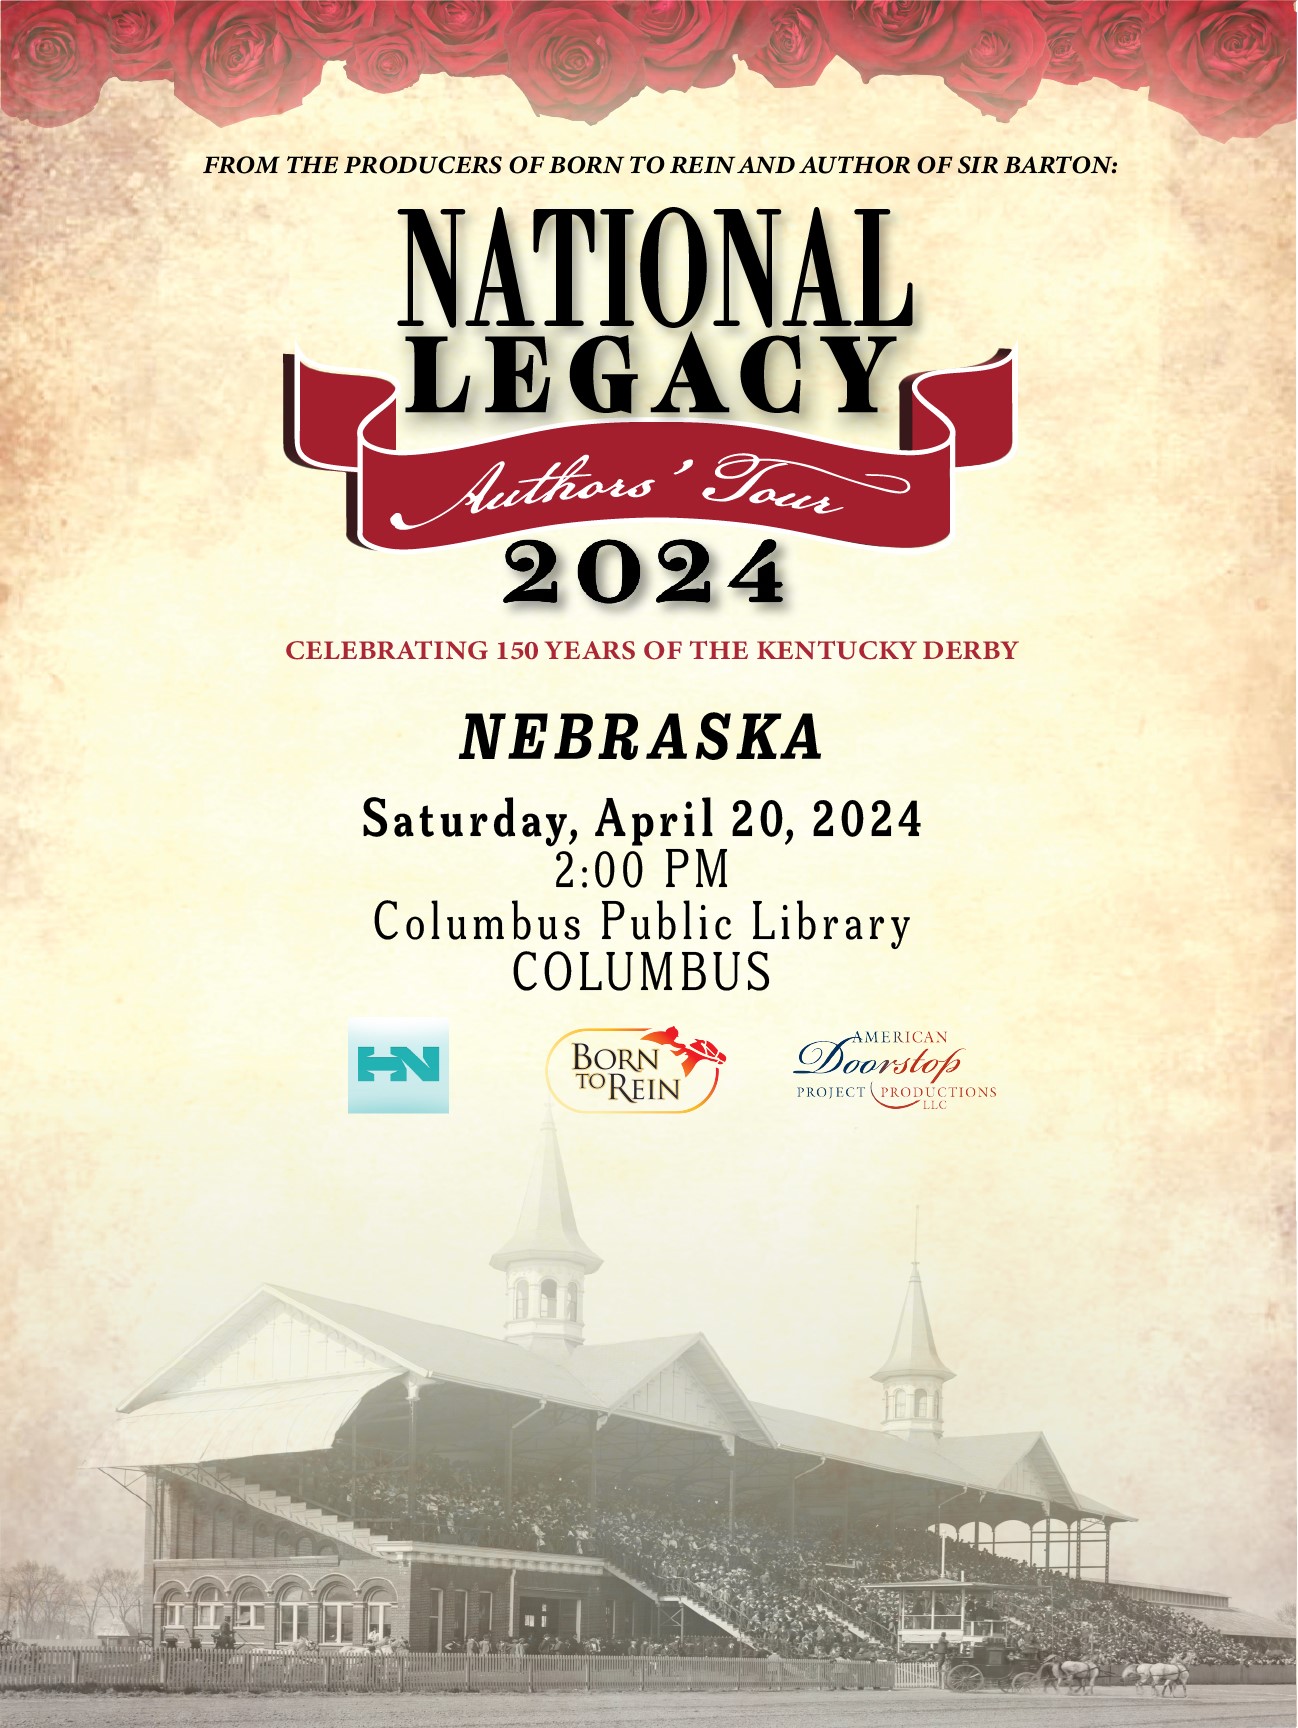 National Legacy Authors' Tour 2024 April 20th 2:00 pm